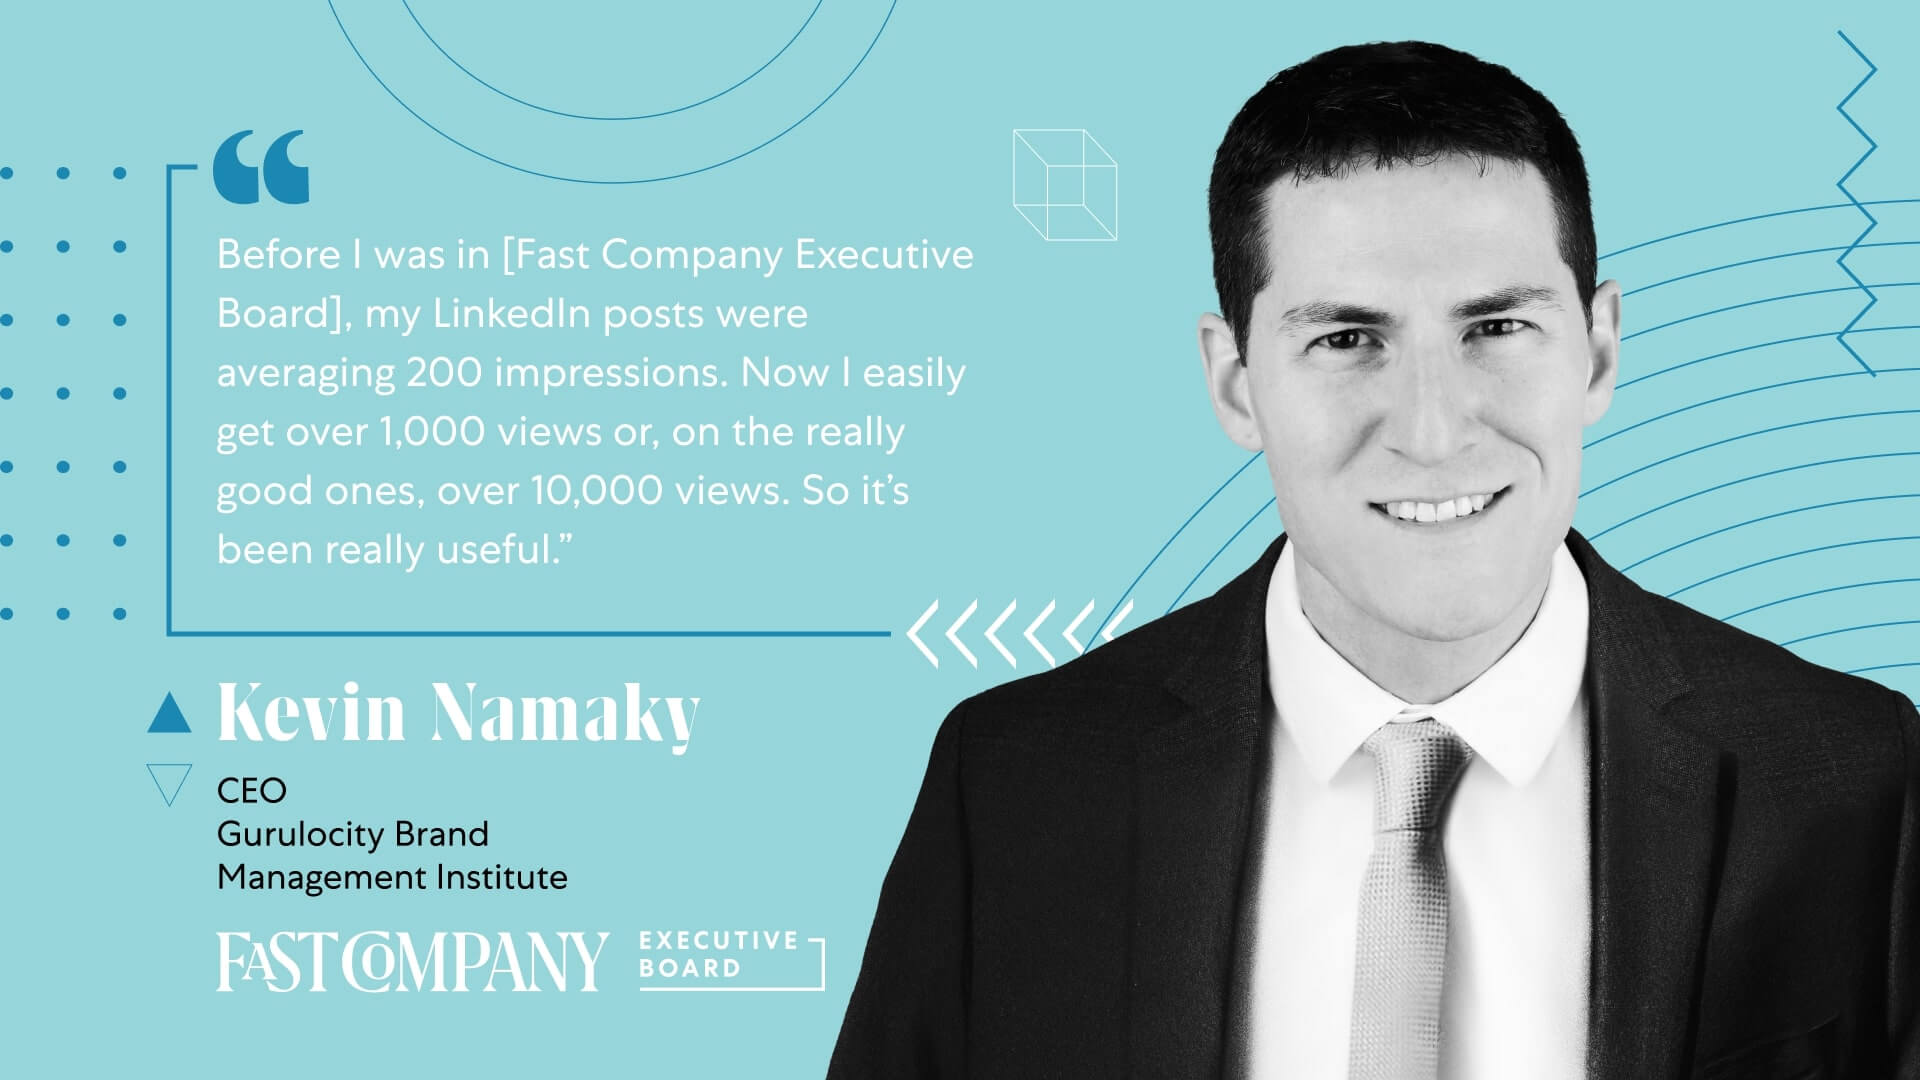 Fast Company Executive Board Publishing Gives Kevin Namaky Increased Social Media Exposure